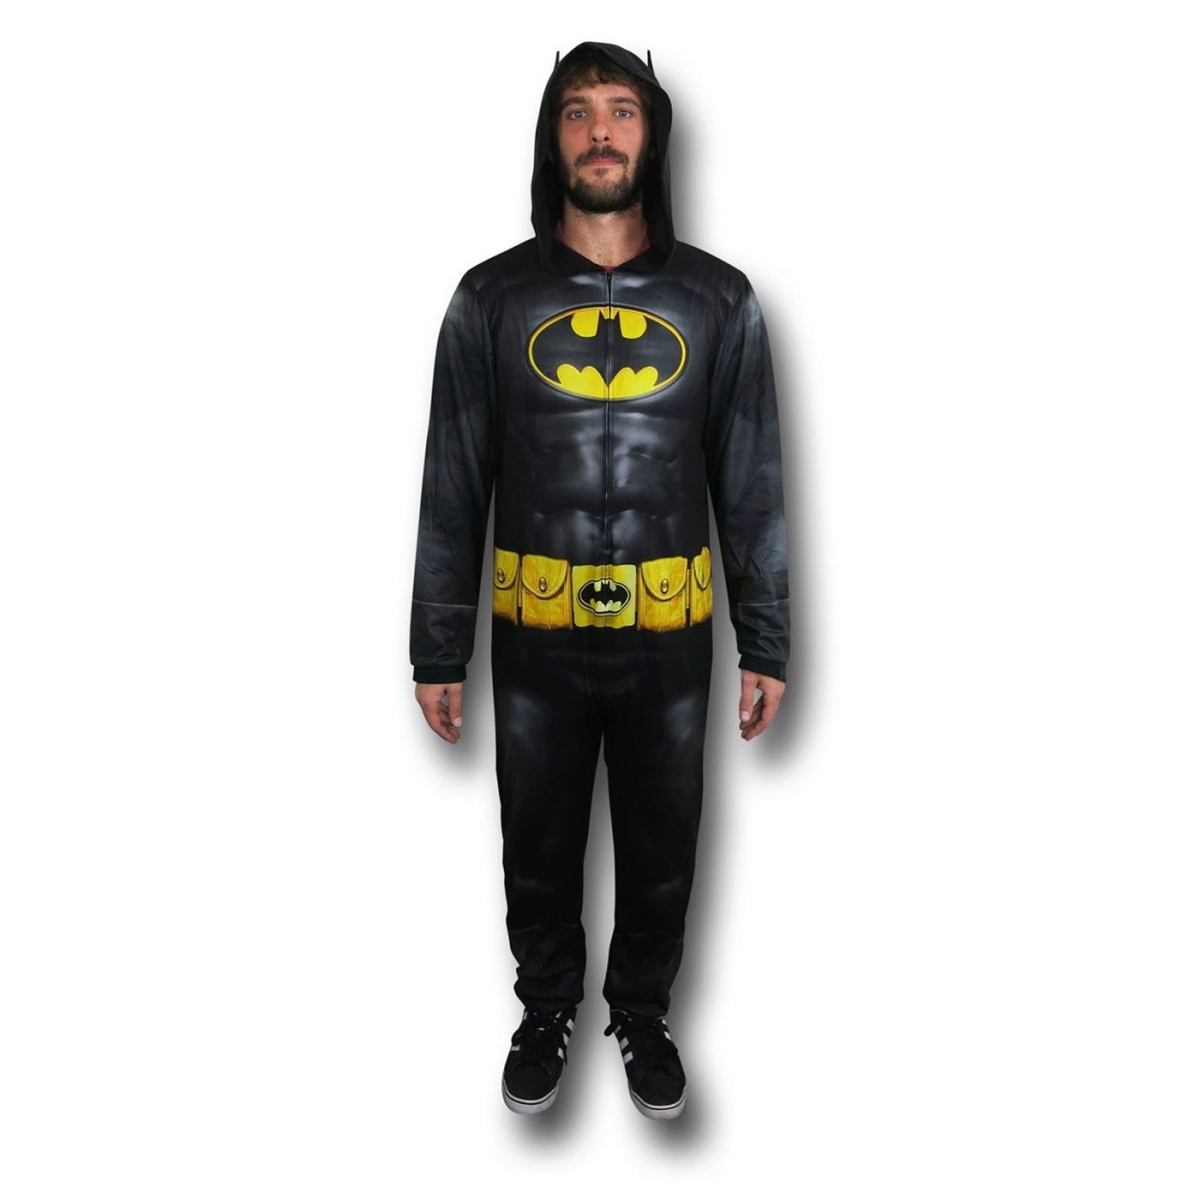 Picture of Batman pajdksubunion-M Batman Dark Knight Sublimated Union Suit - Medium